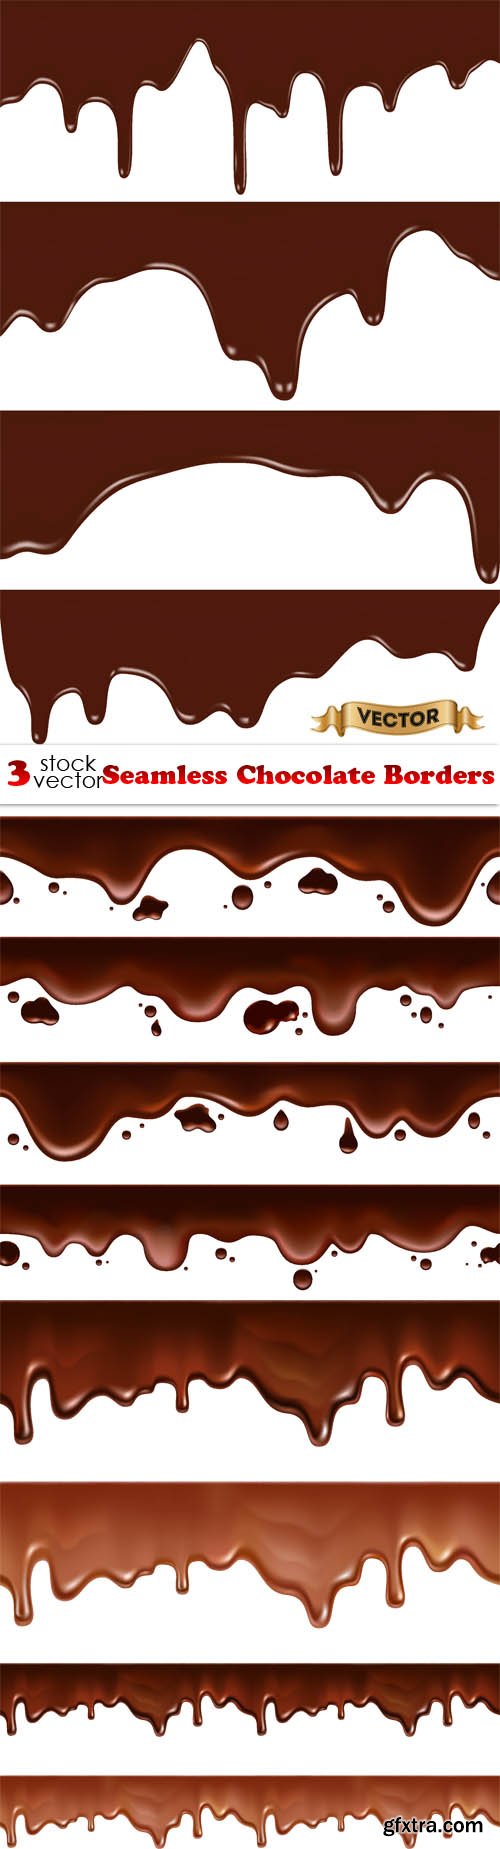 Vectors - Seamless Chocolate Borders